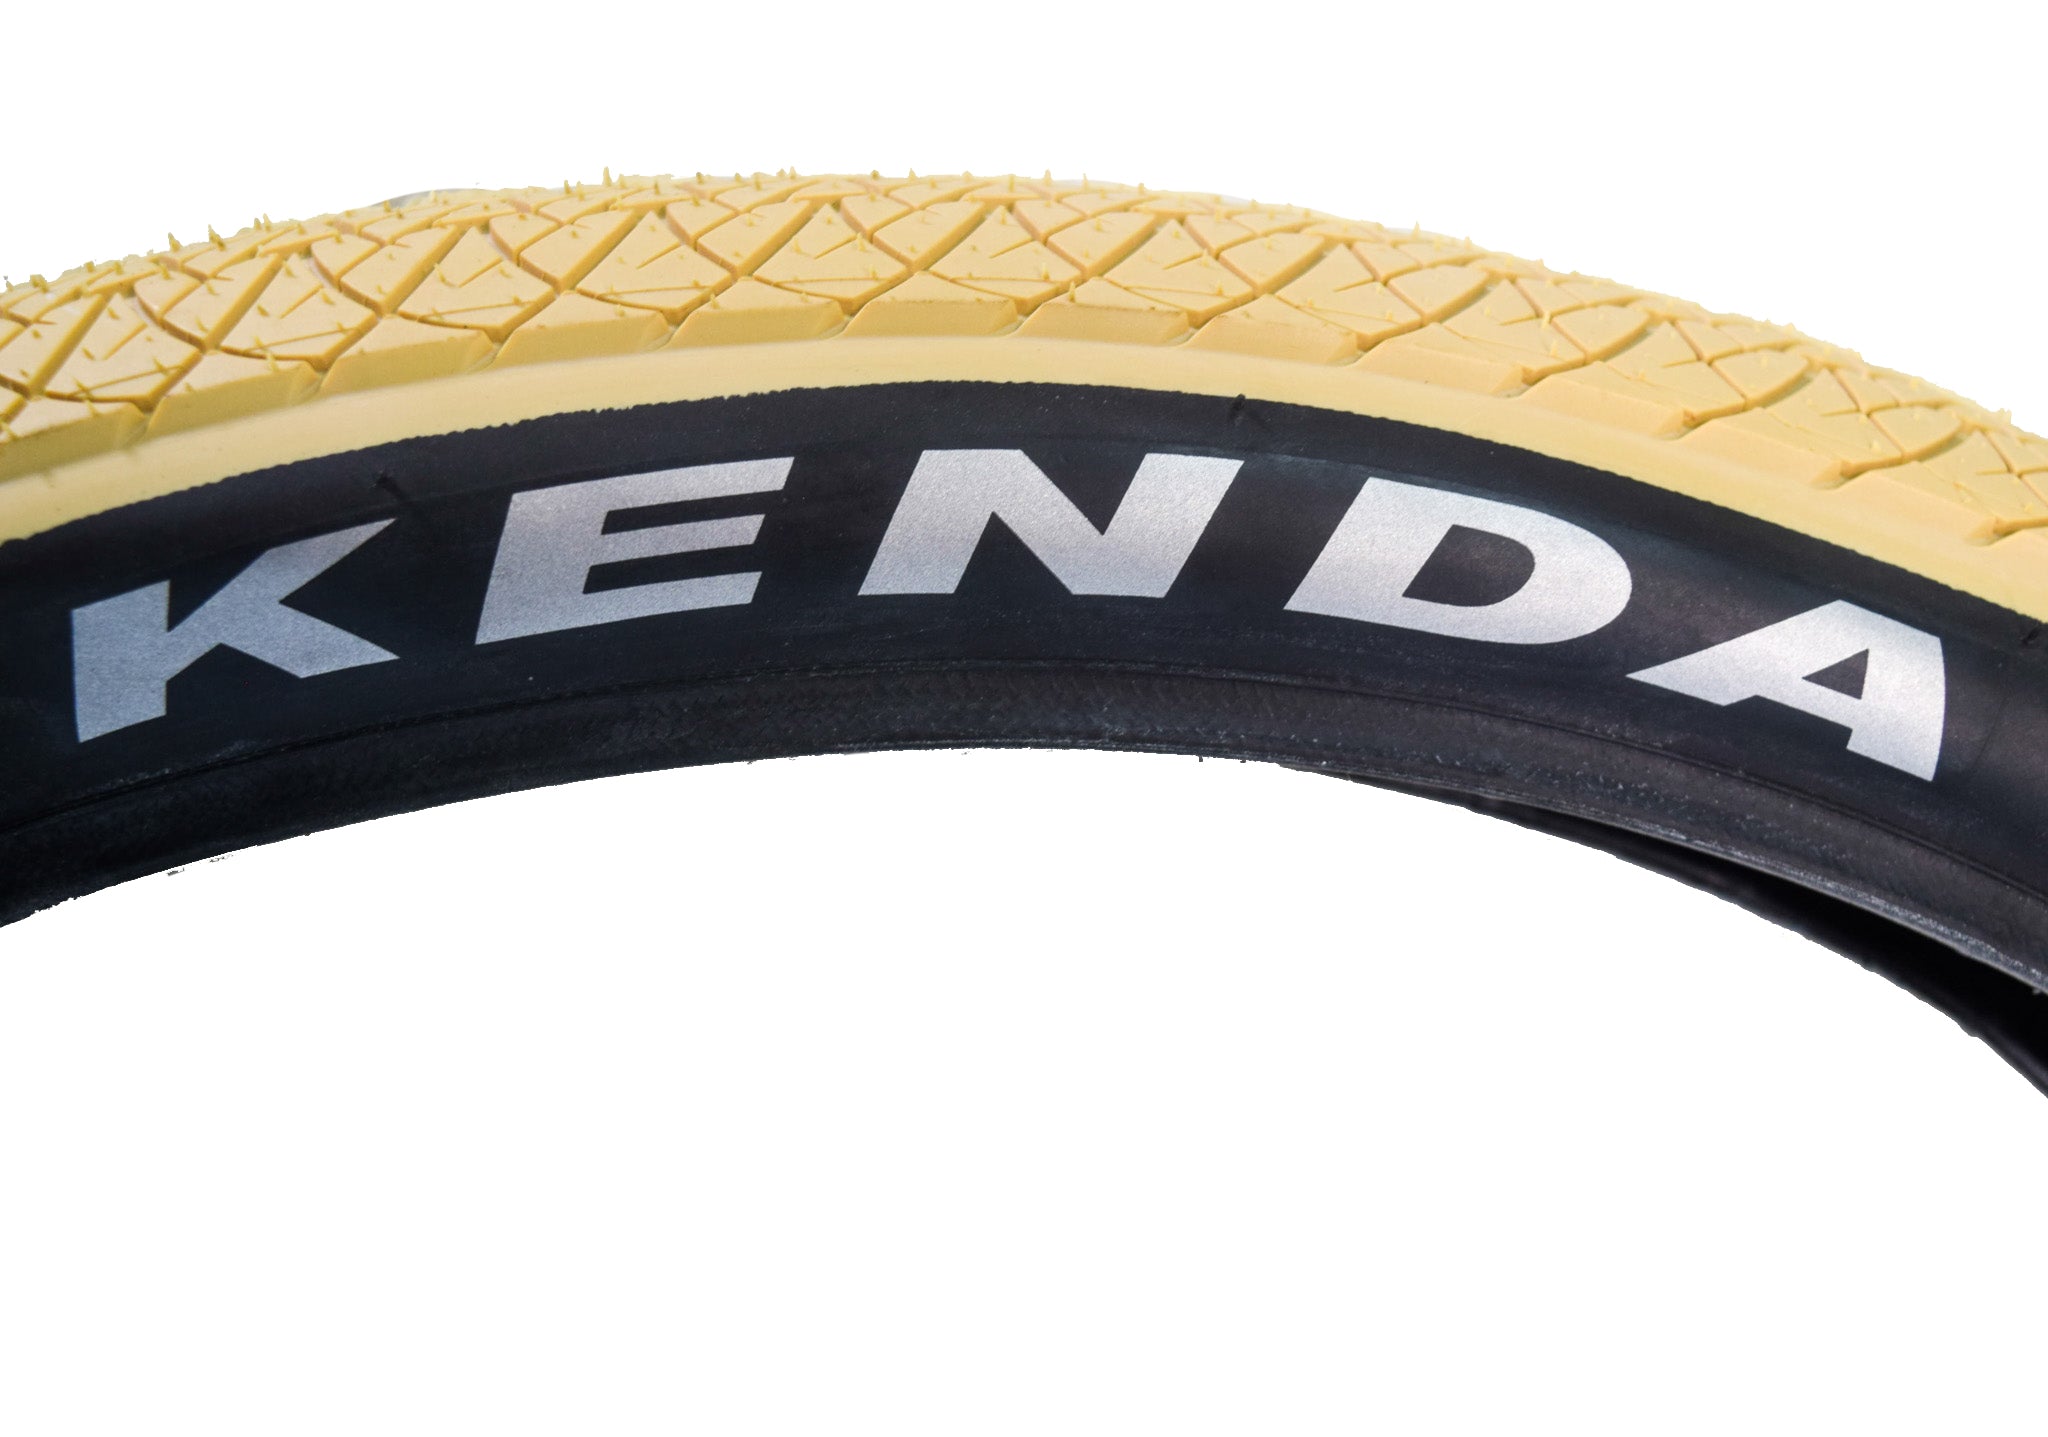 Kenda 3-Sixty Pro TR 120tpi 20x2.25 Tire, 20x2.00-2.40 Tube, Keychain (2 Pack)